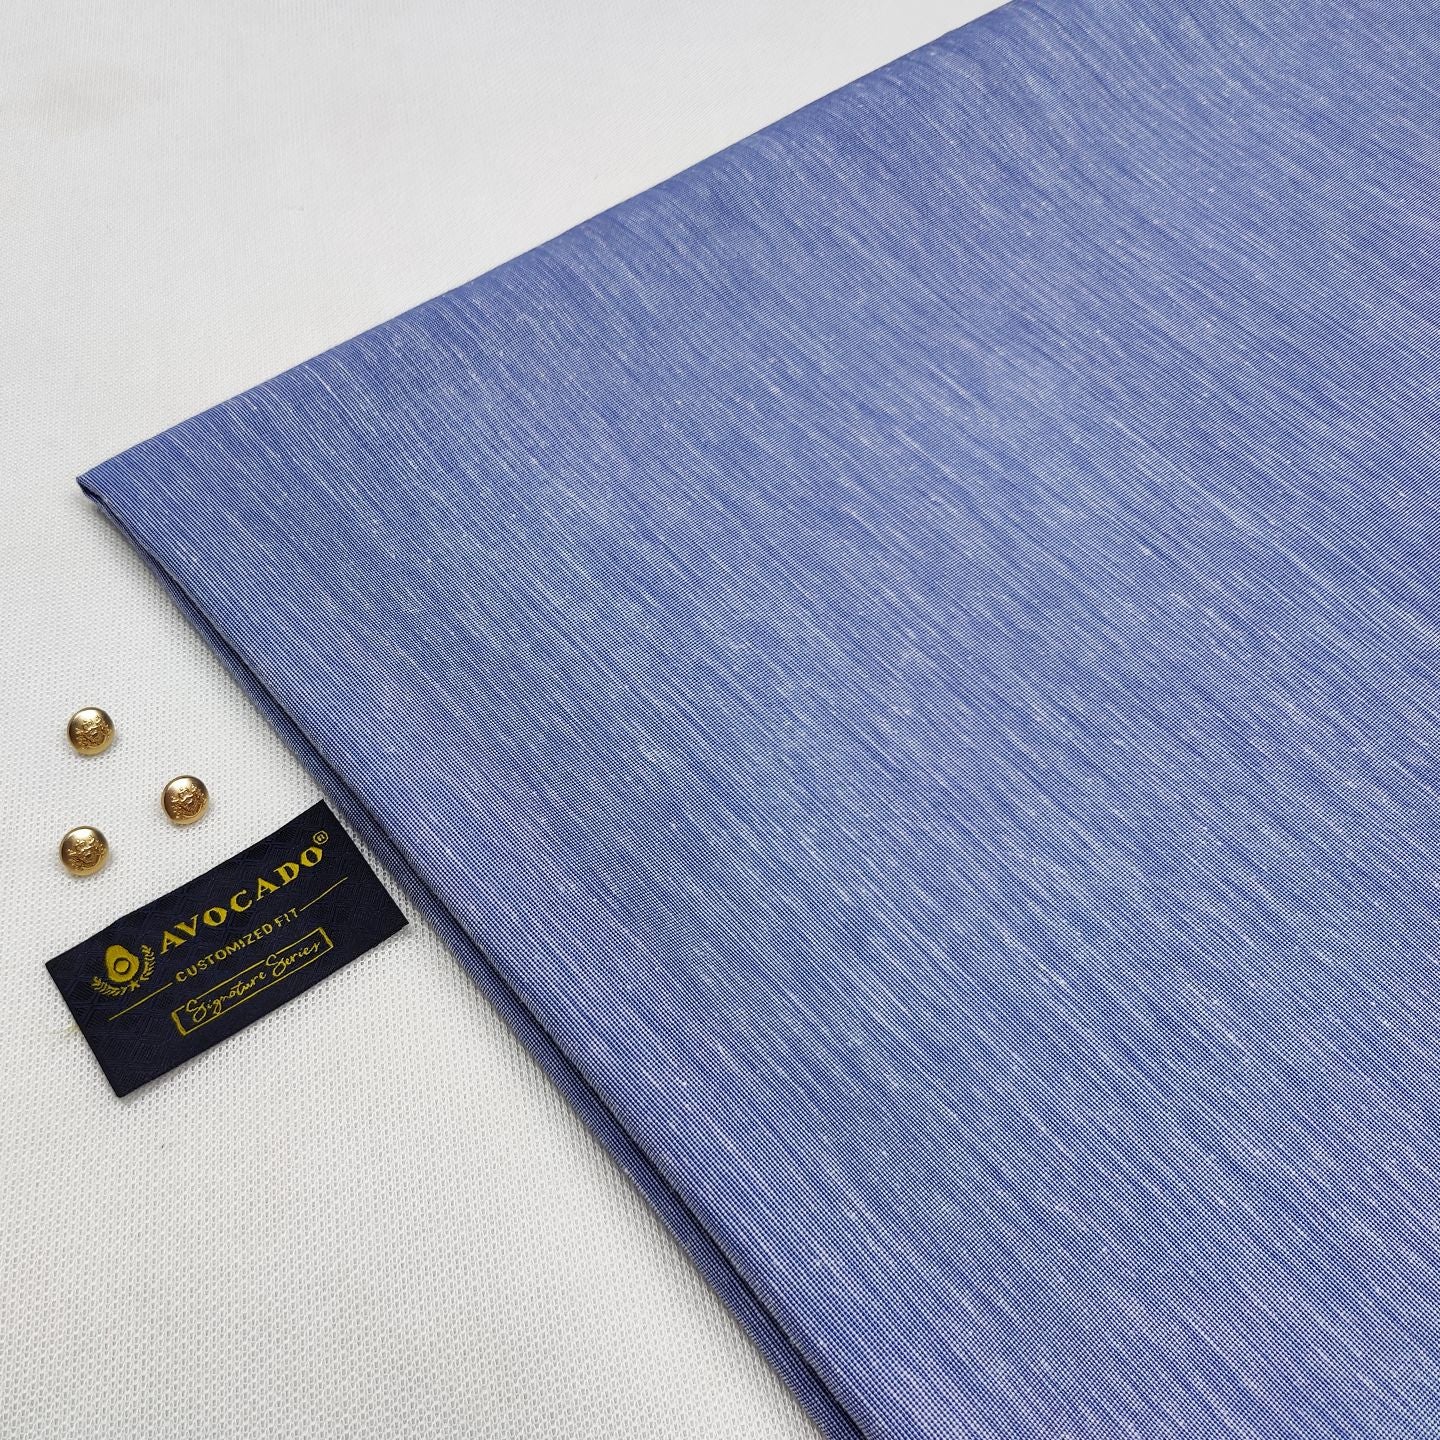 Blue Irish Self kameez shalwar Fabric with Buttons & label